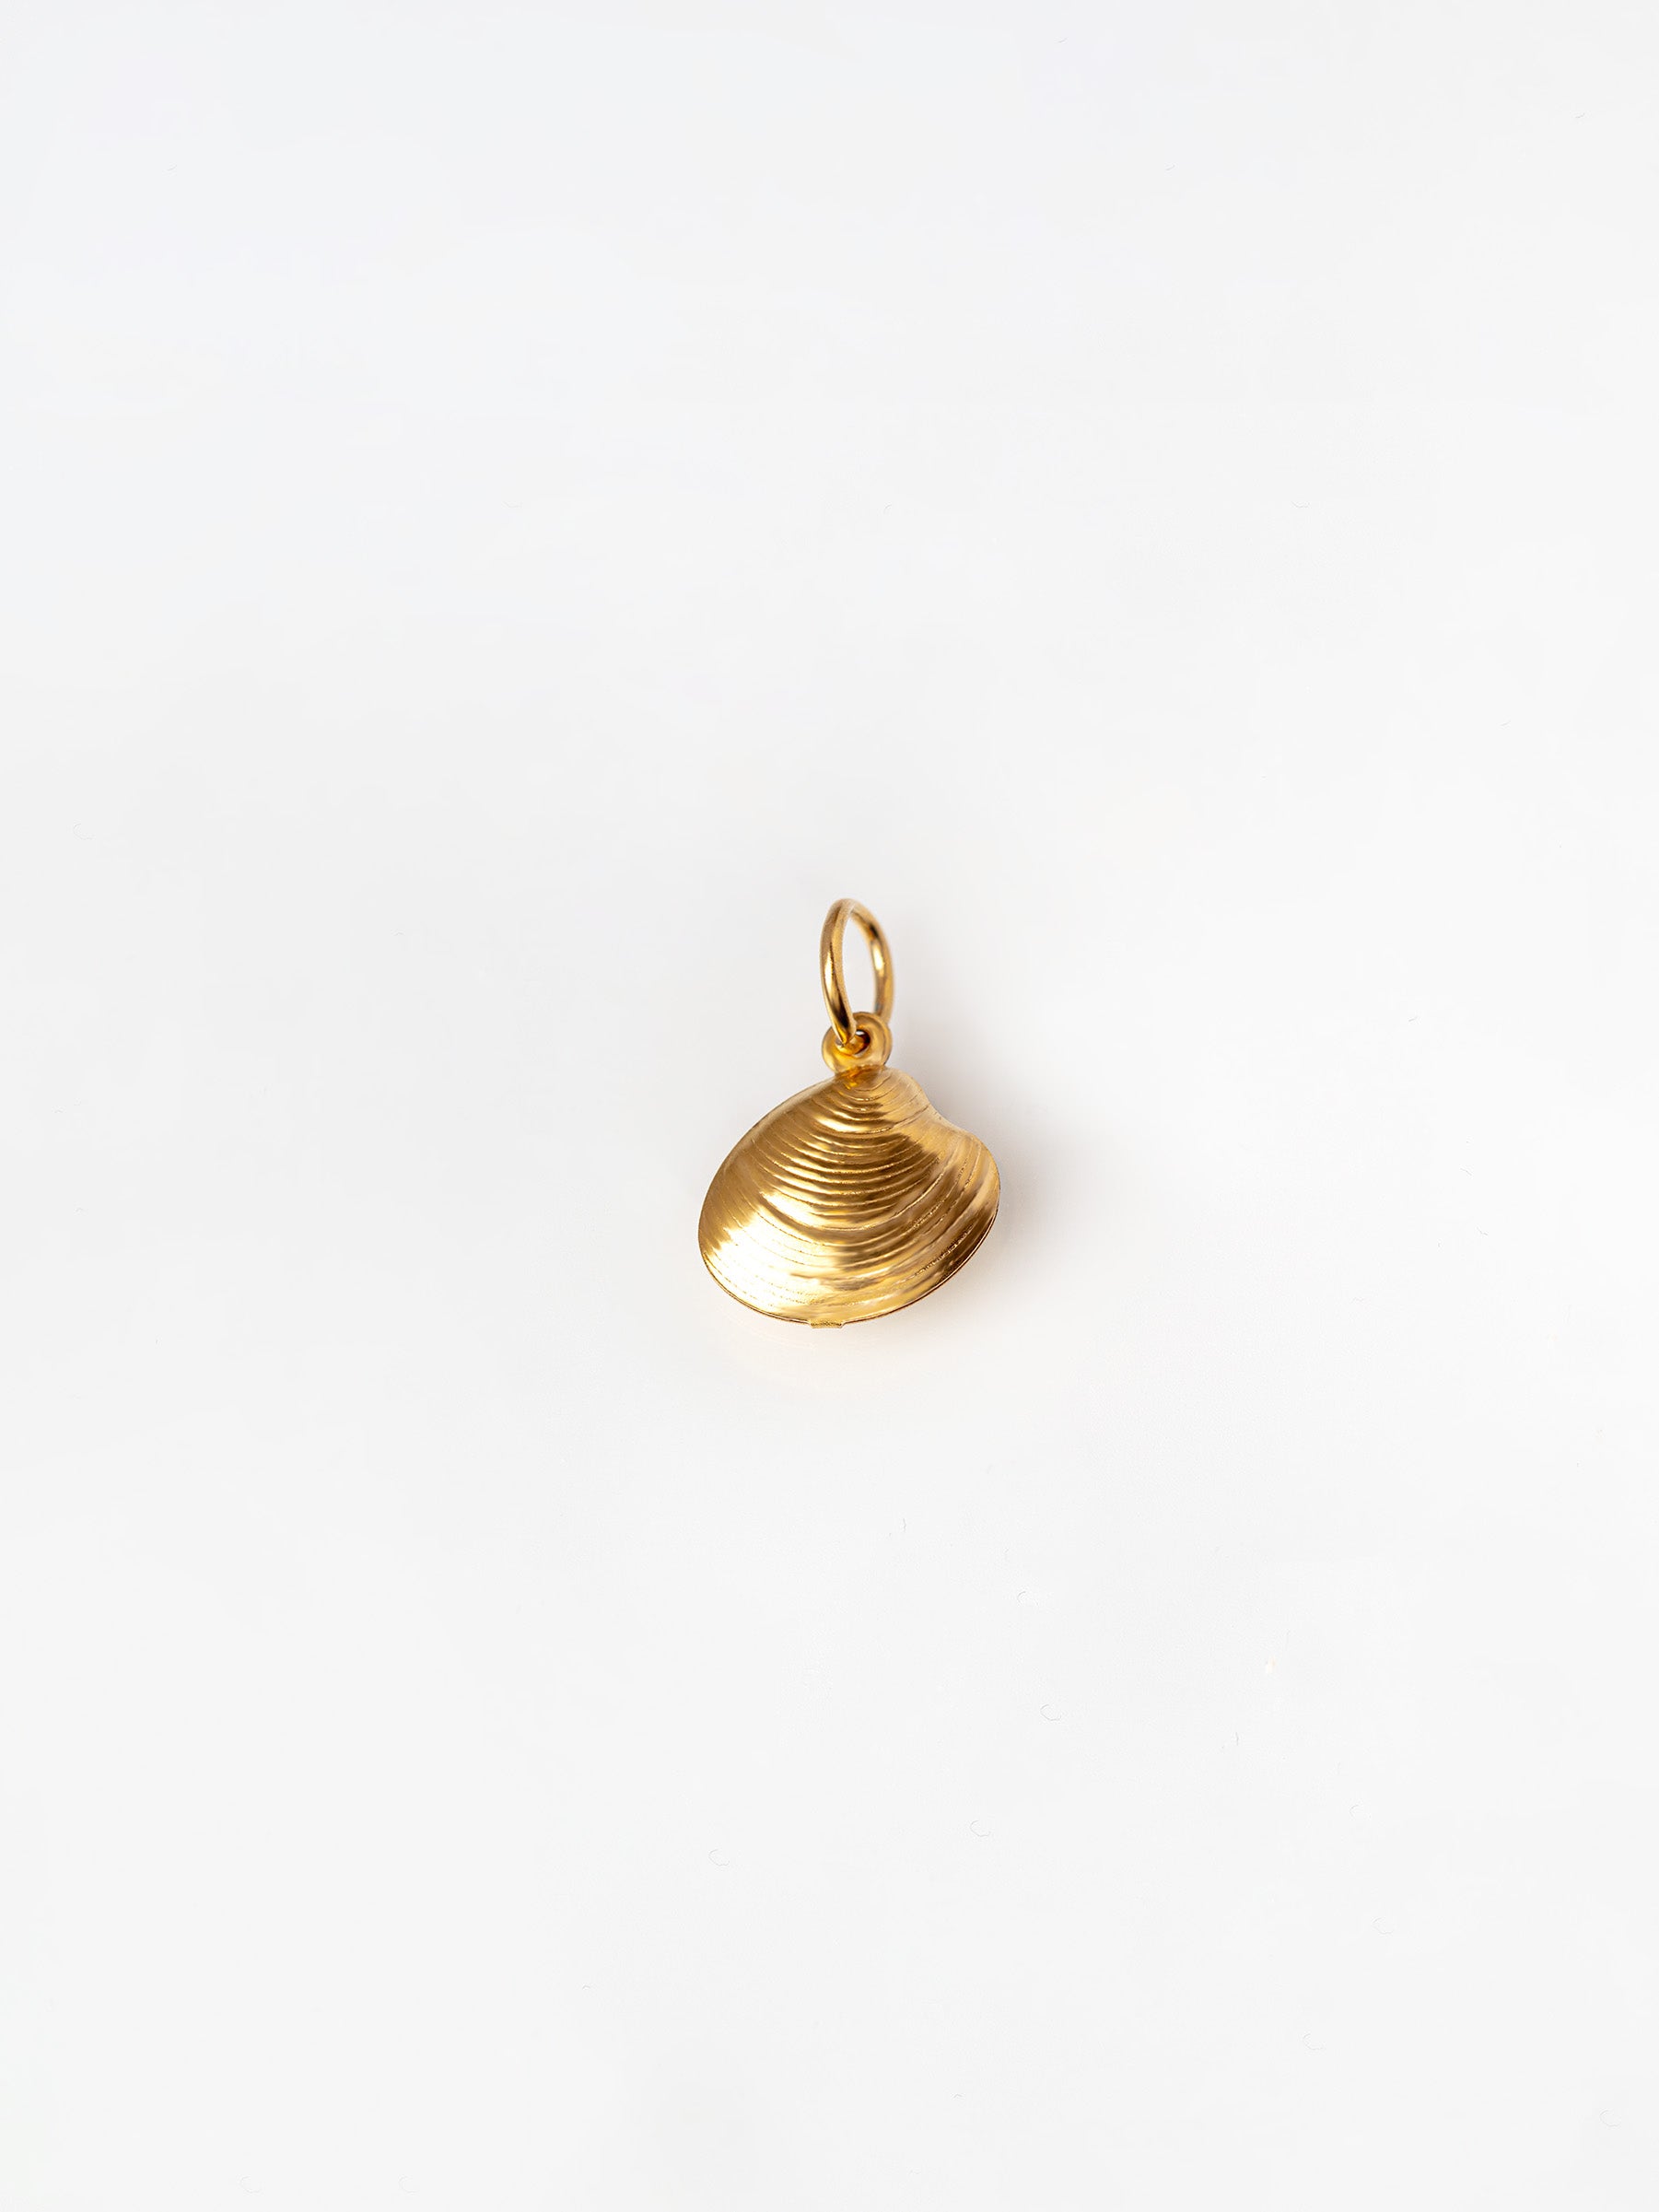 Gold Tiny Sea Shell Pendant / Charm